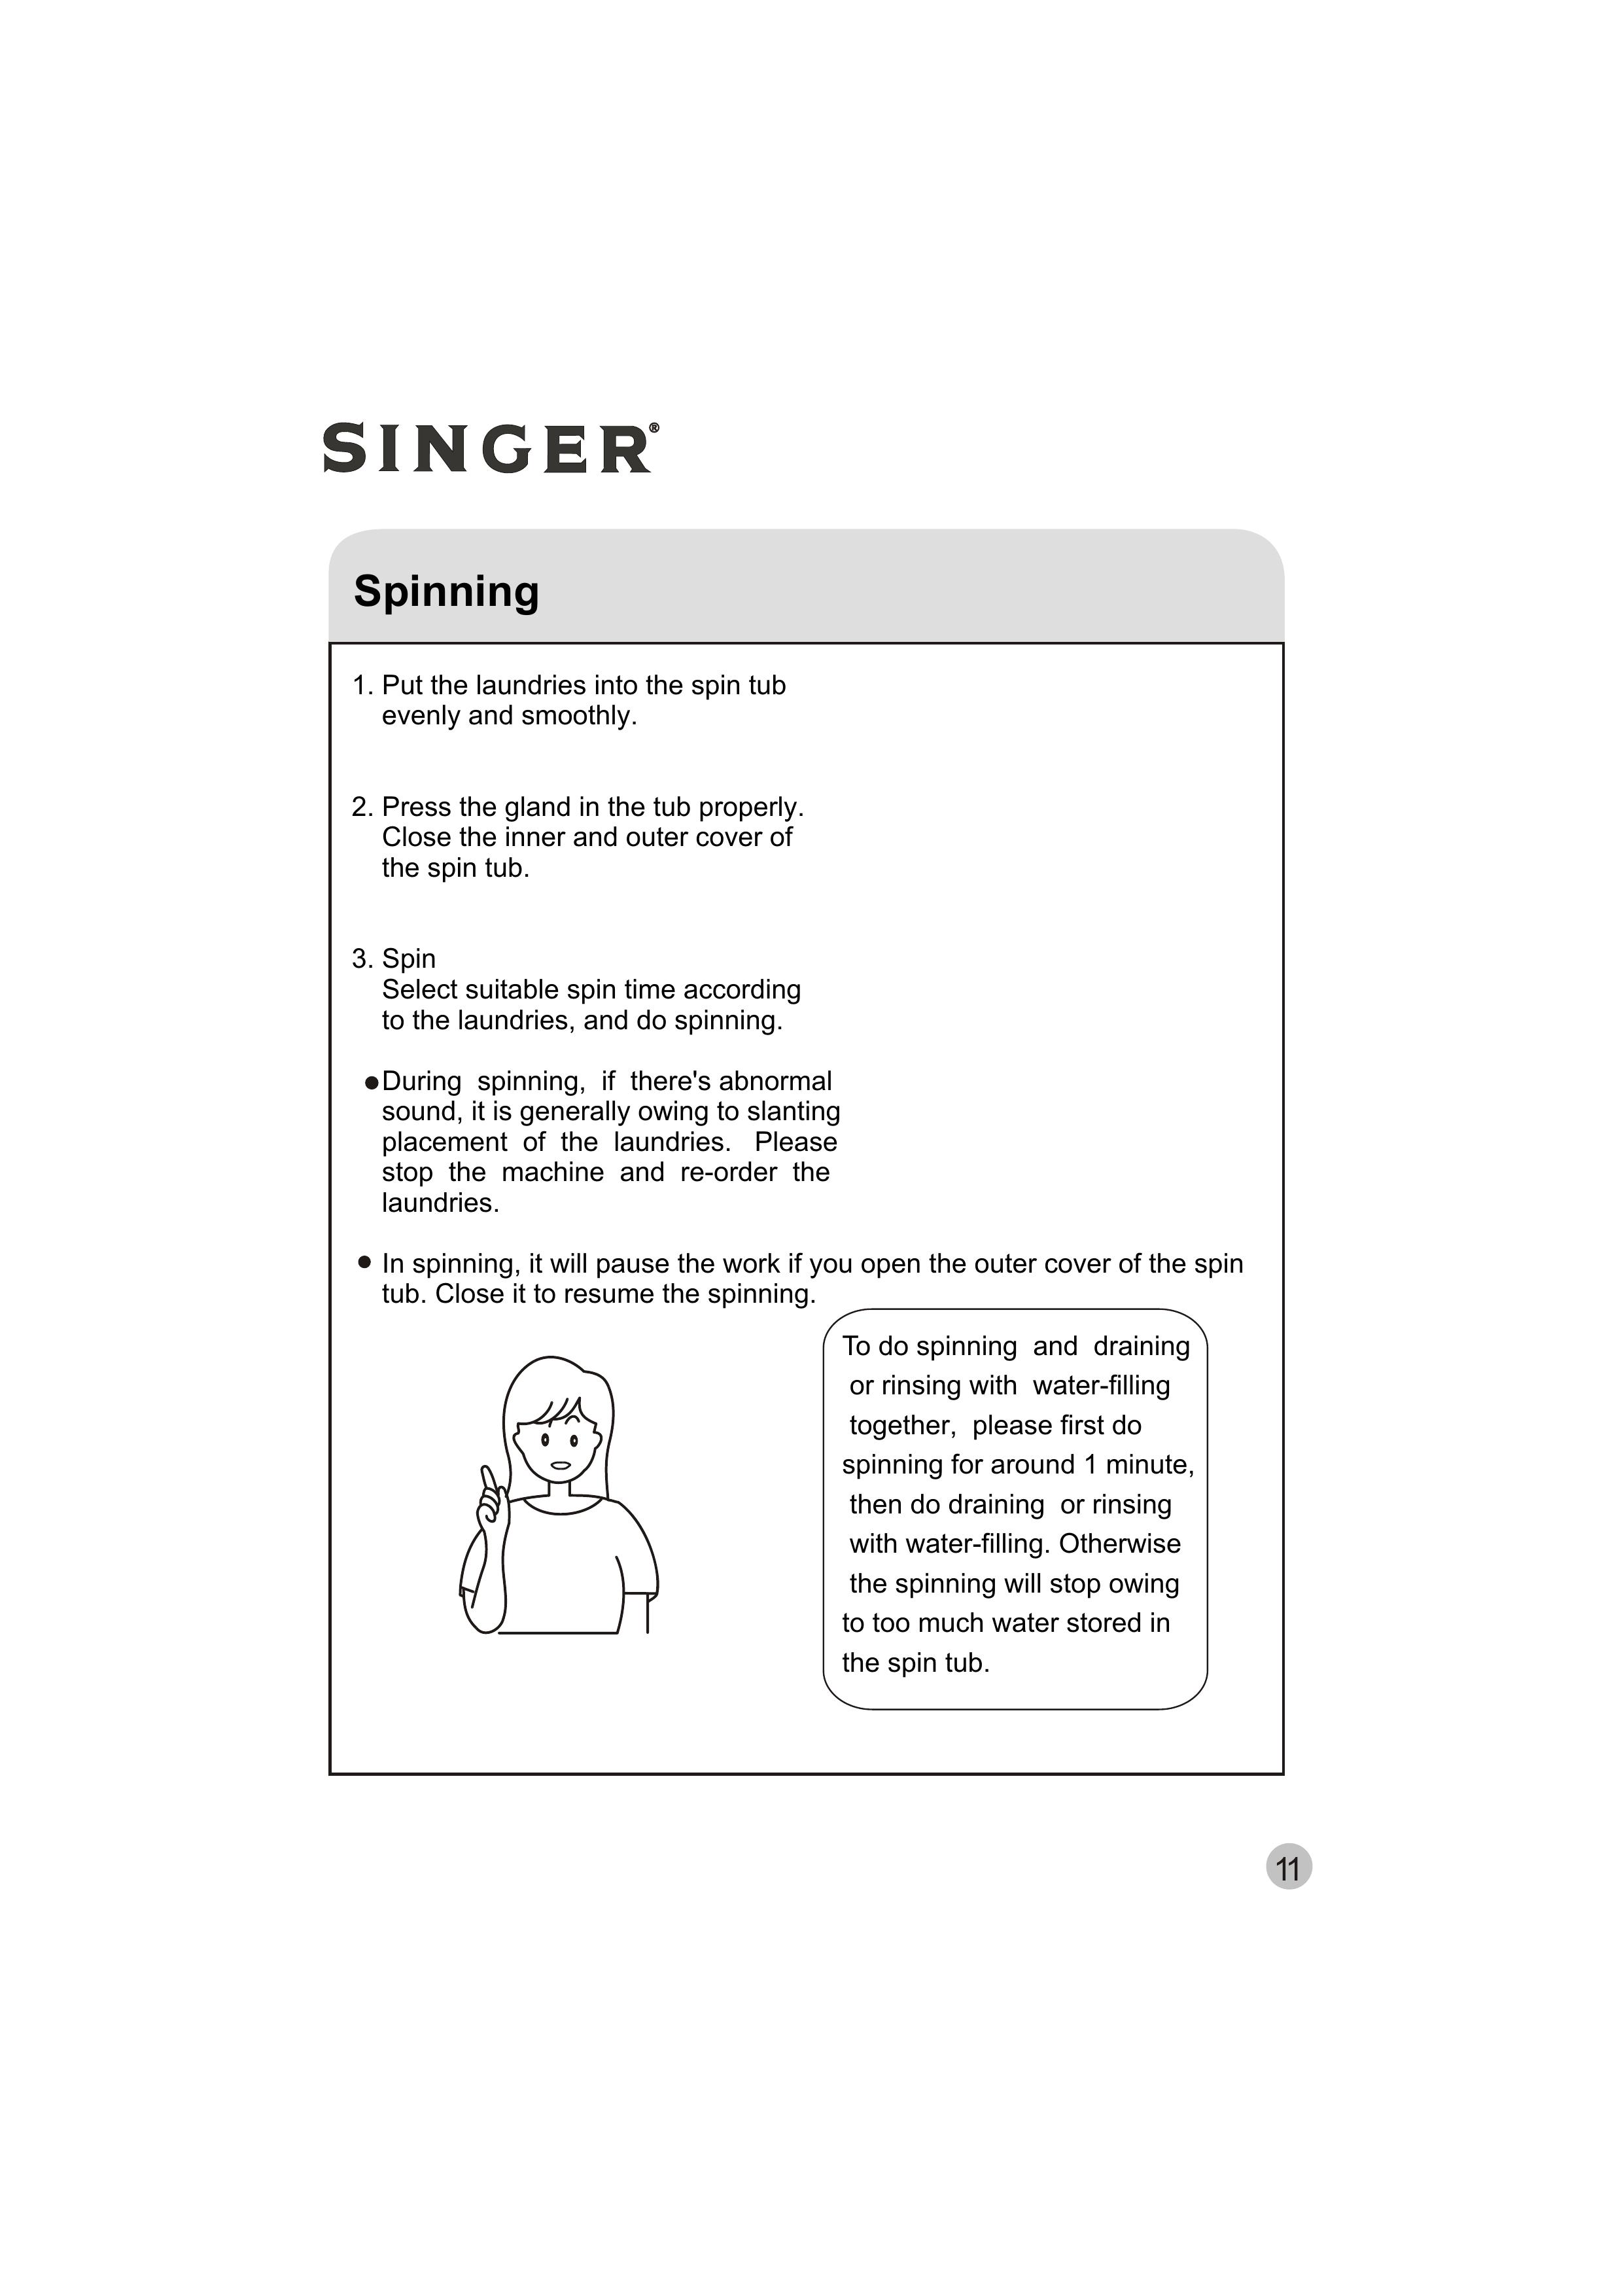 Singer WT5113 Washer/Dryer User Manual (Page 12)